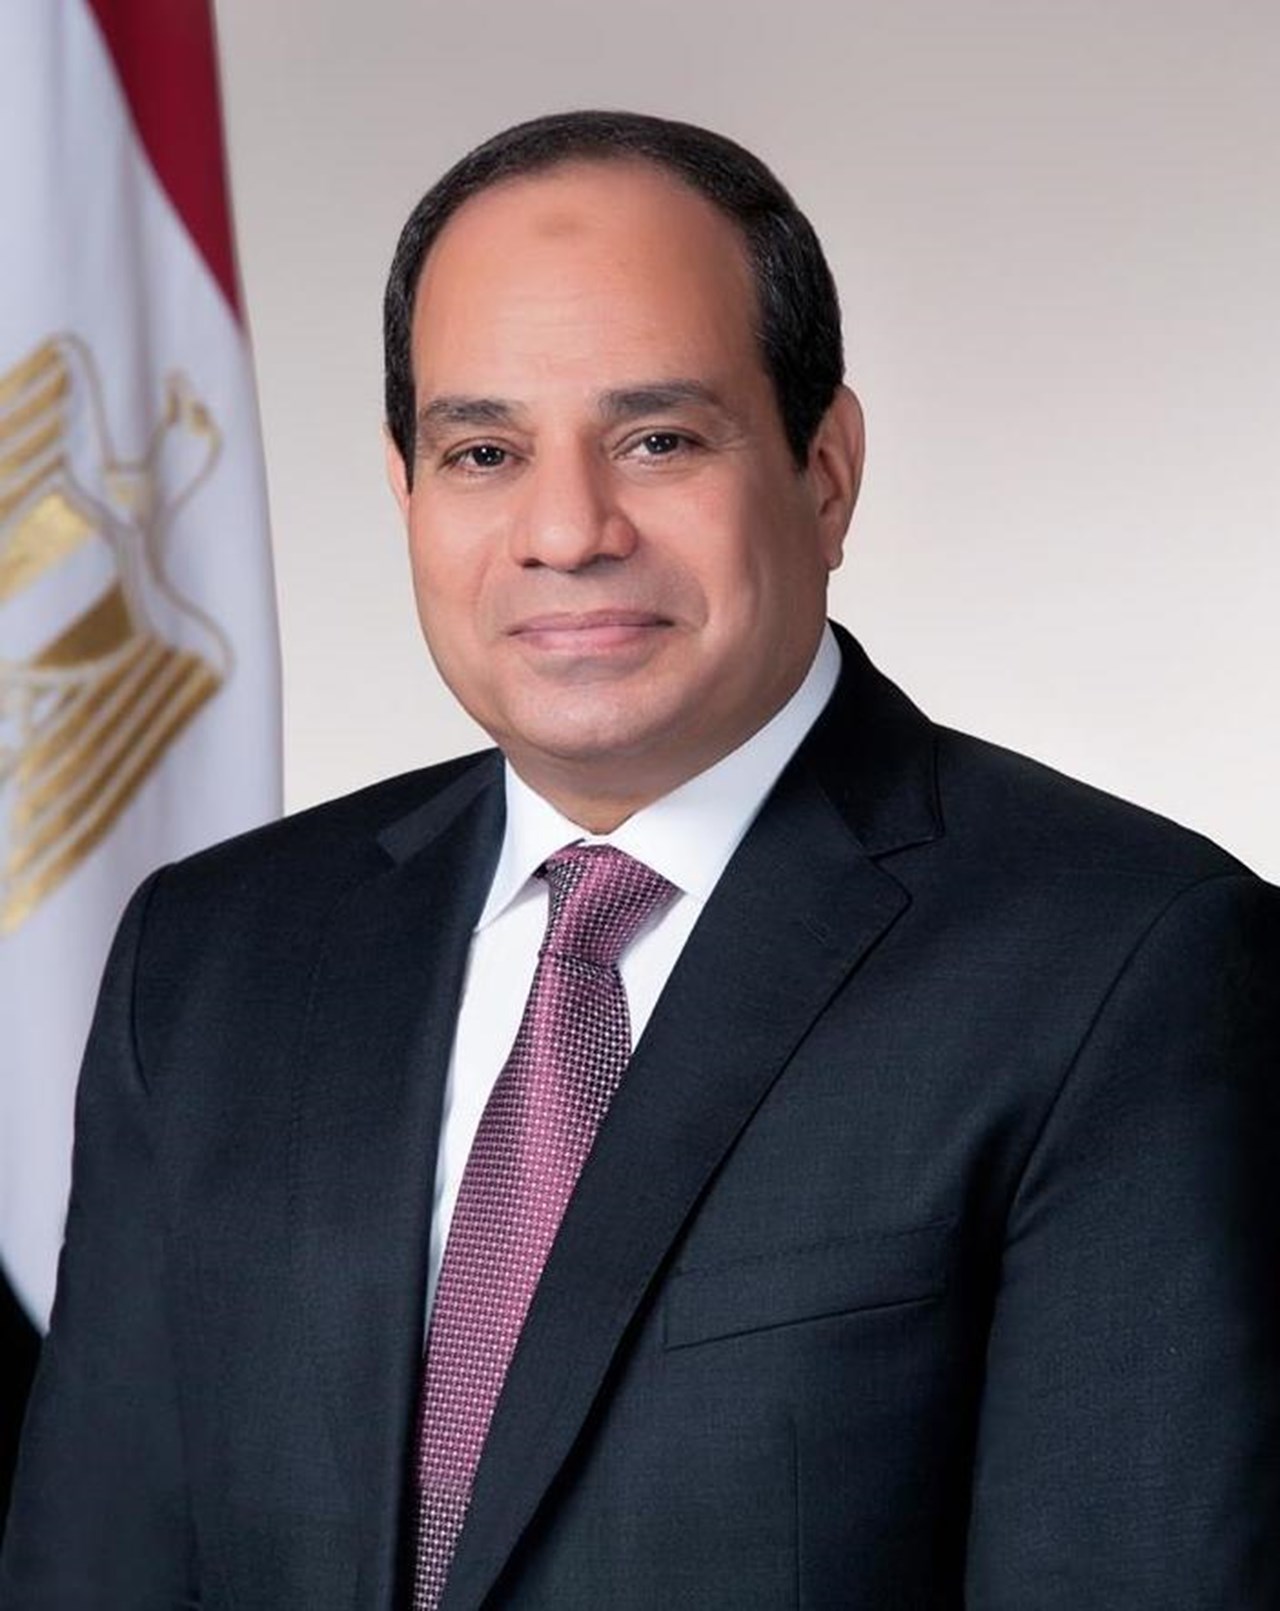 президент египта